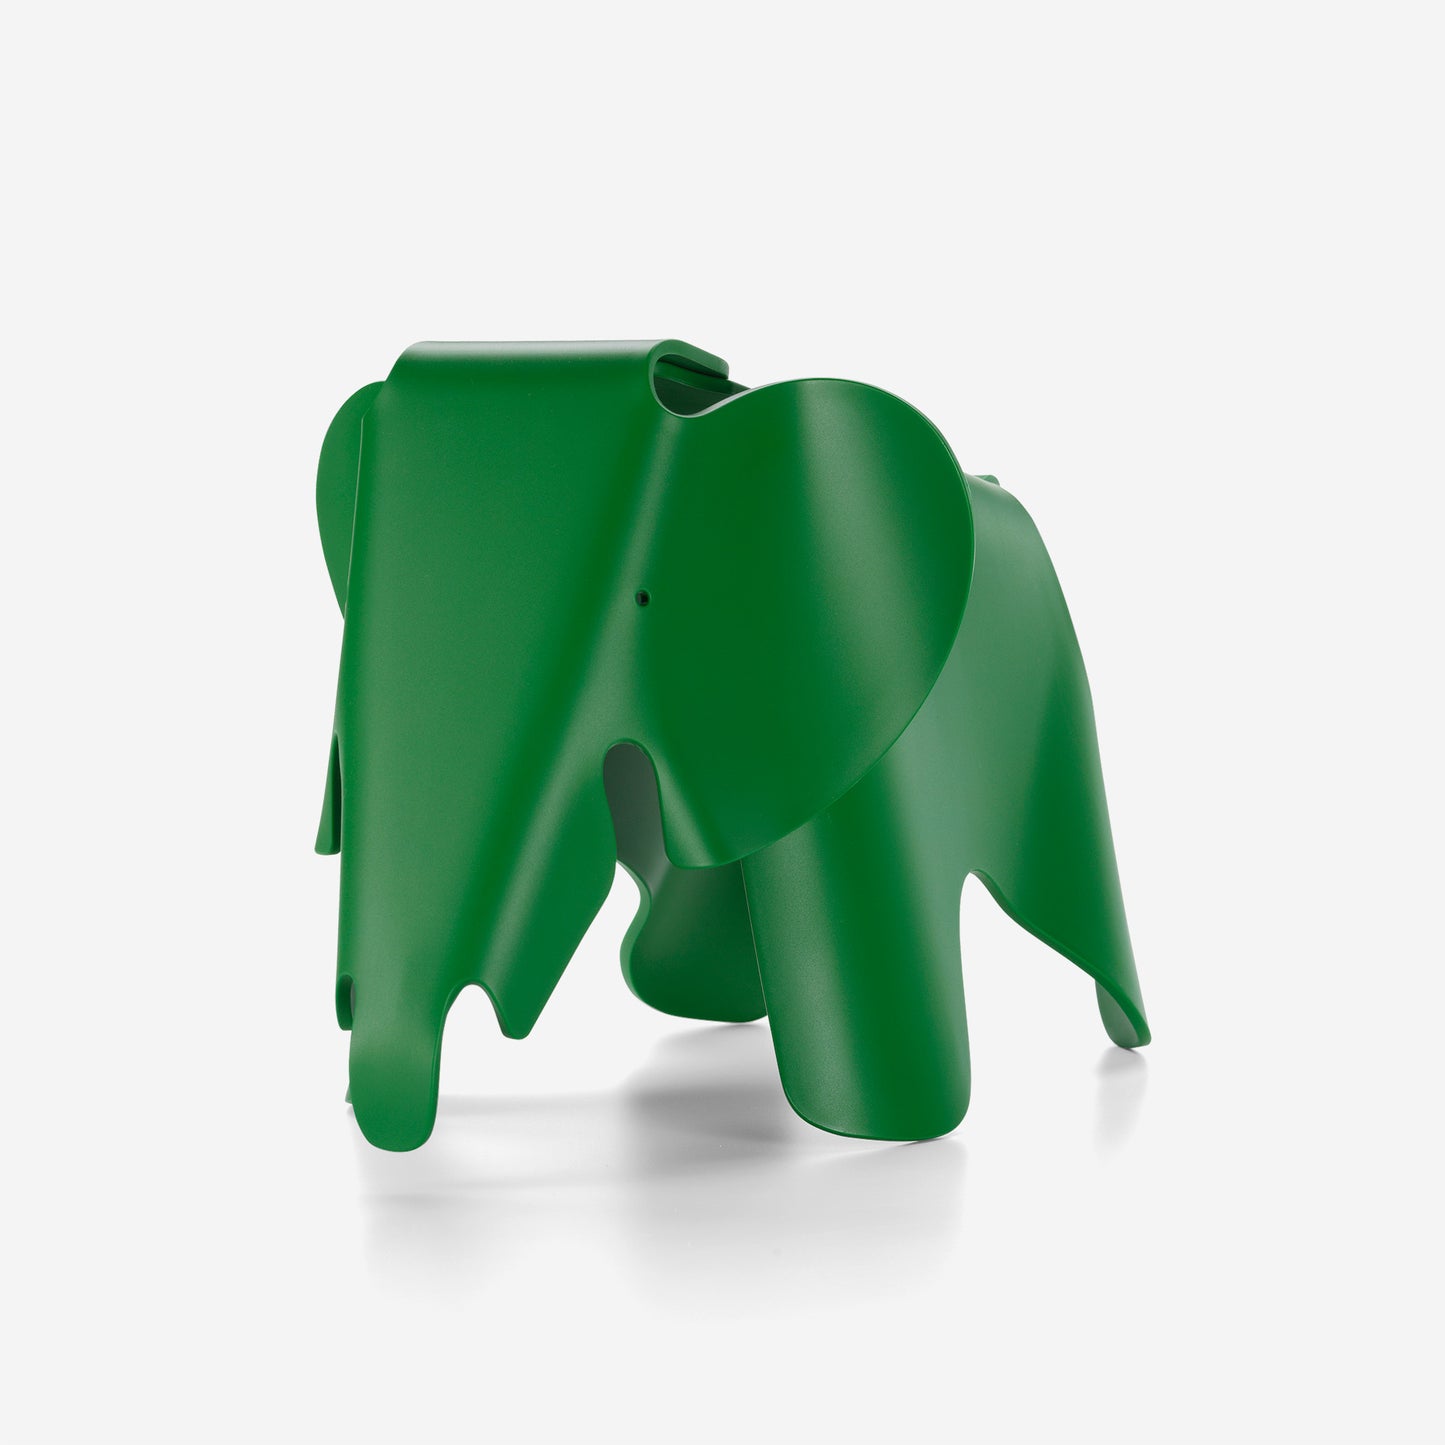 Vitra Eames Elephant Small